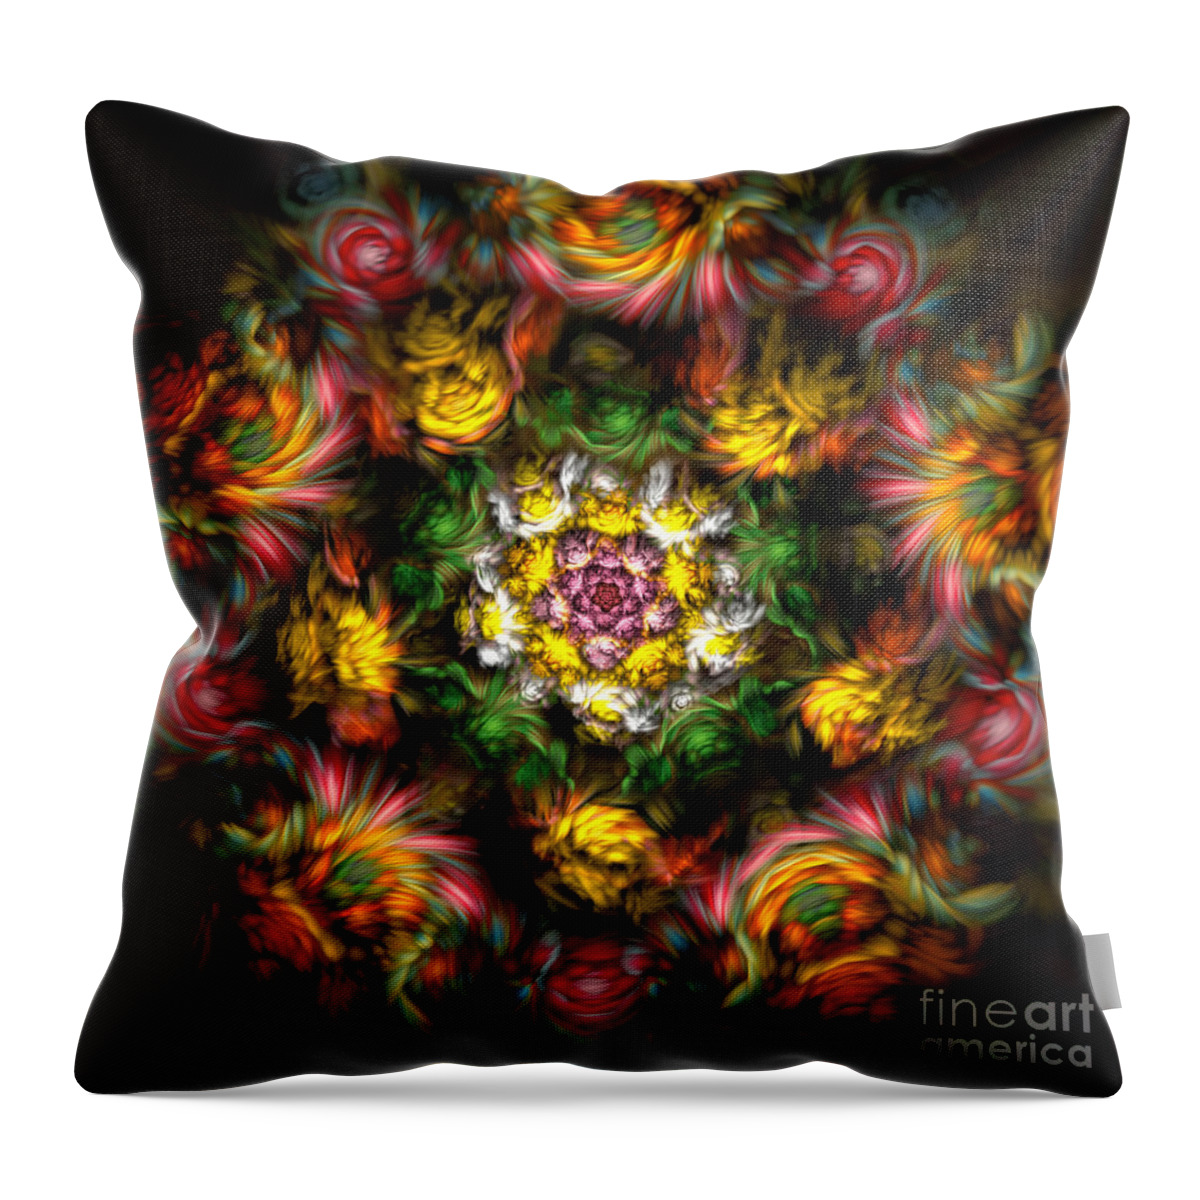 Mandala Throw Pillow featuring the digital art Garden of Dreams by Olga Hamilton